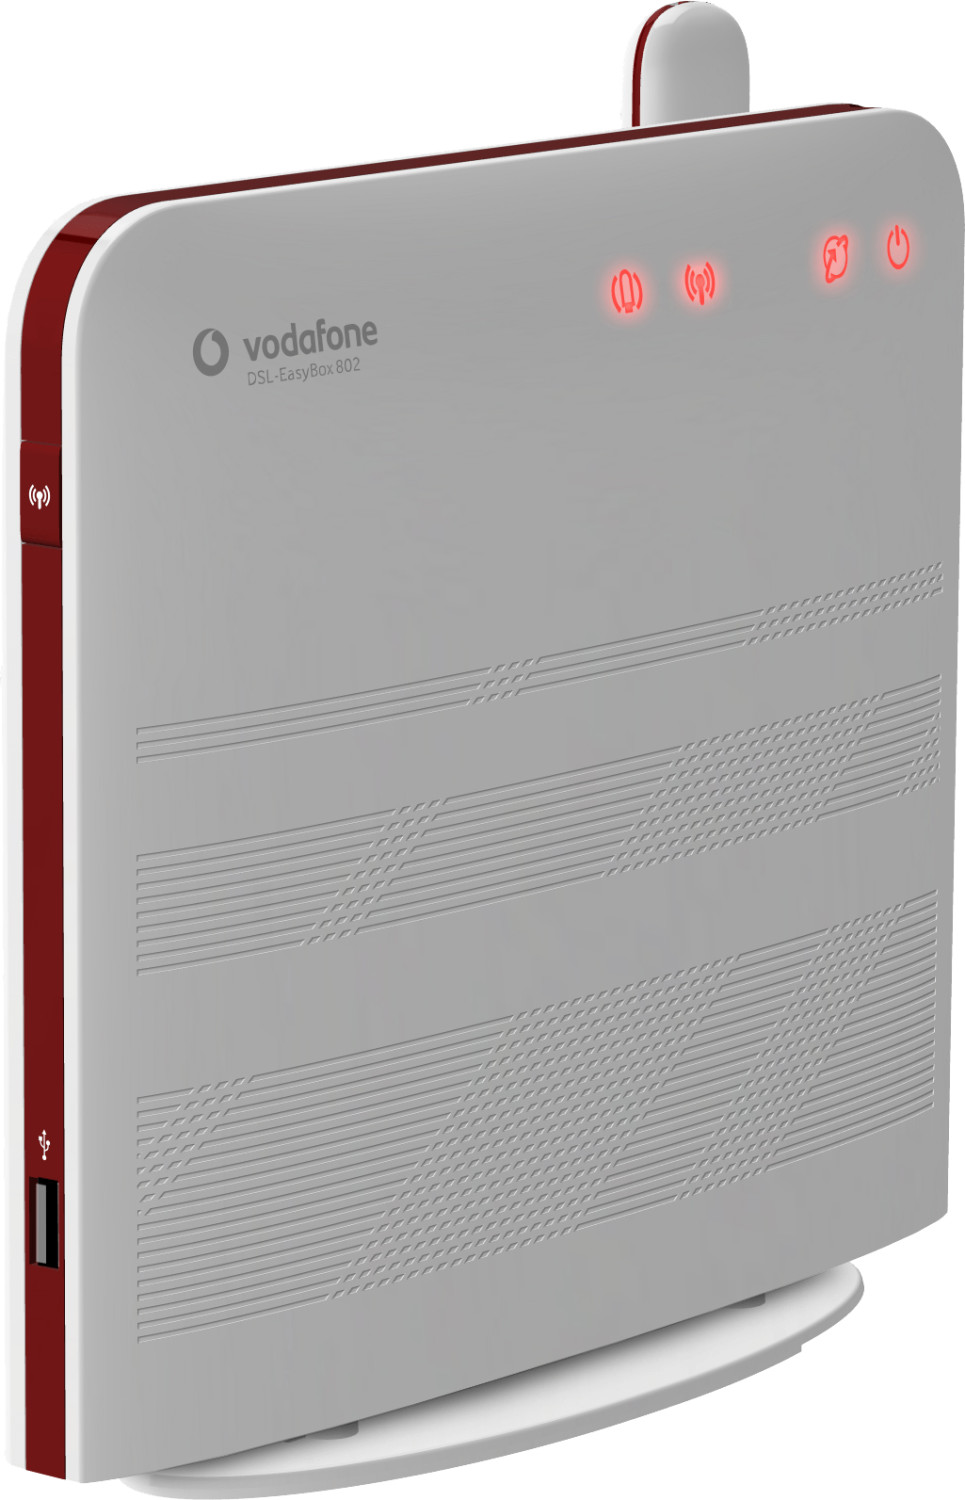 Vodafone EasyBox 802